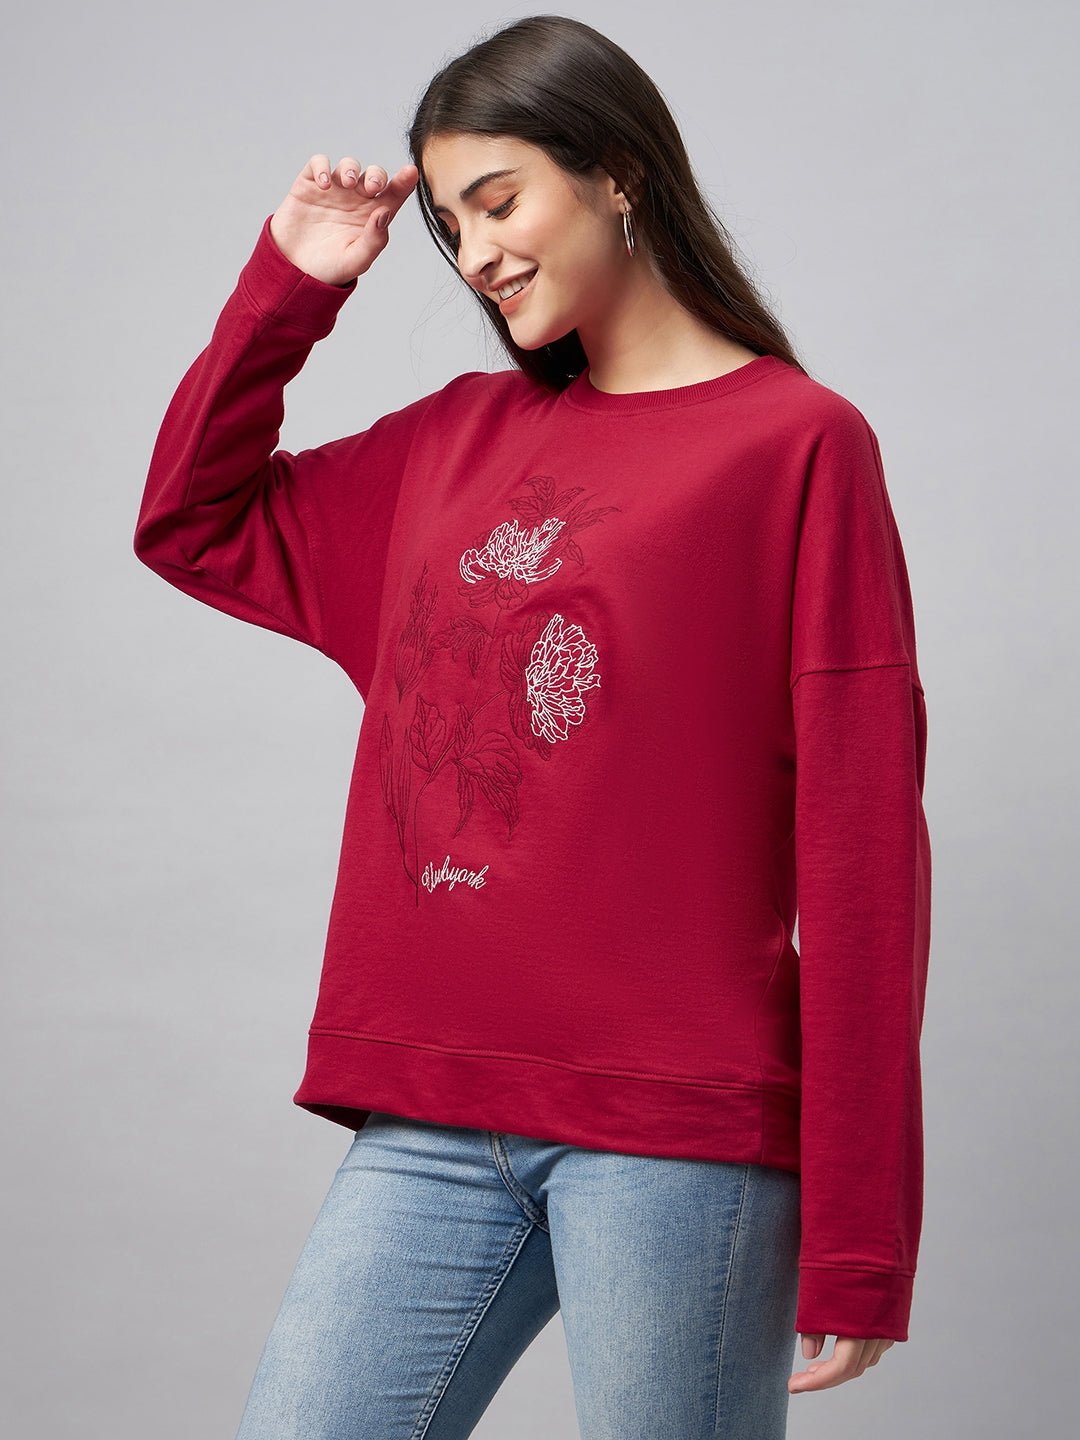 Maroon Embroidery Round Neck Sweatshirt - clubyork